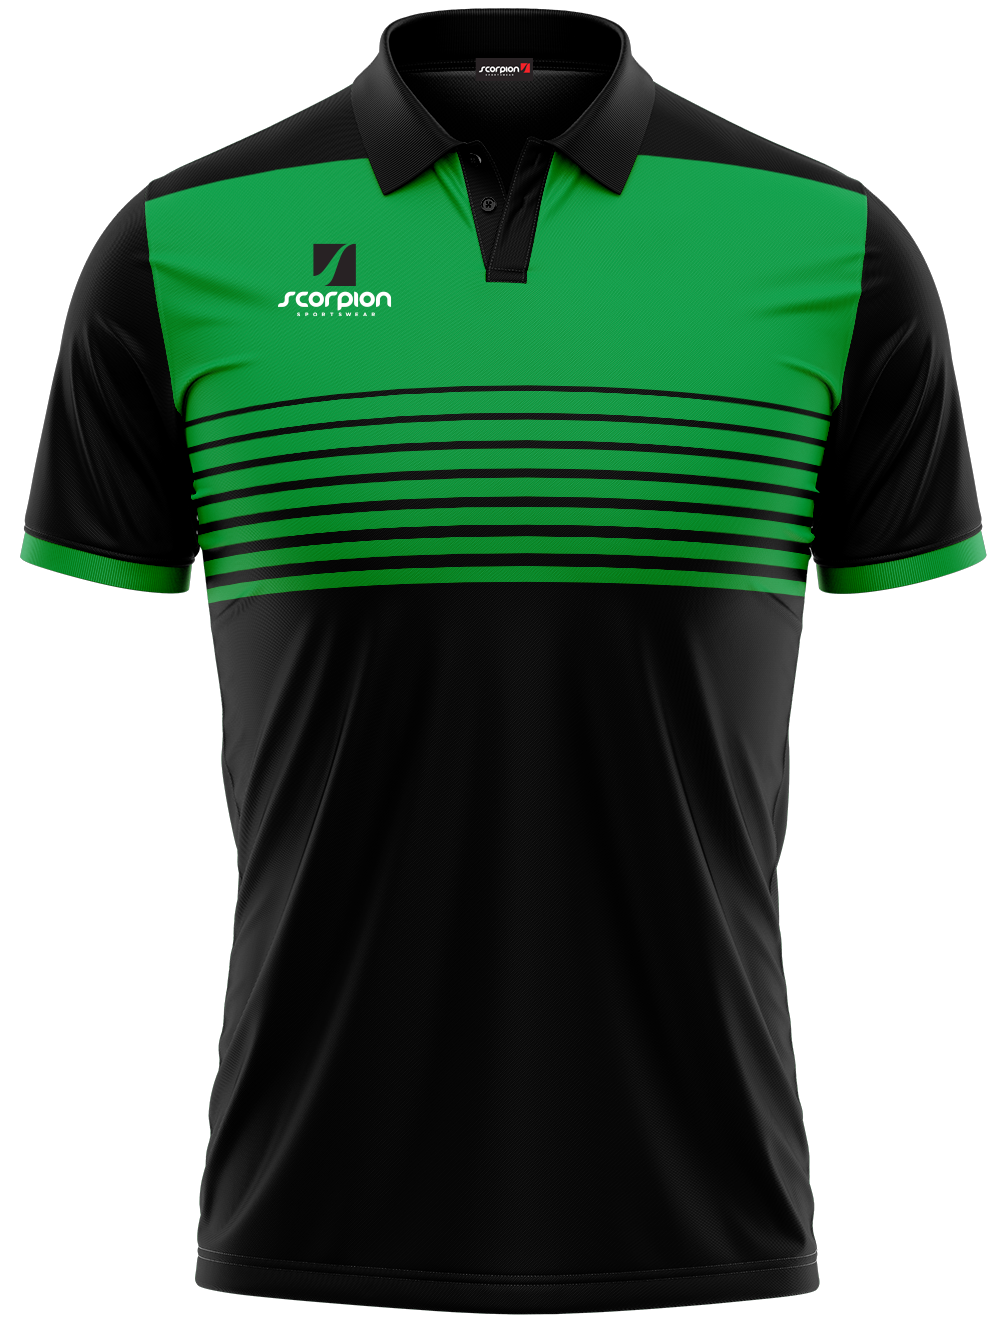 Scorpion Polo Shirts Pattern 1 - Black/Green